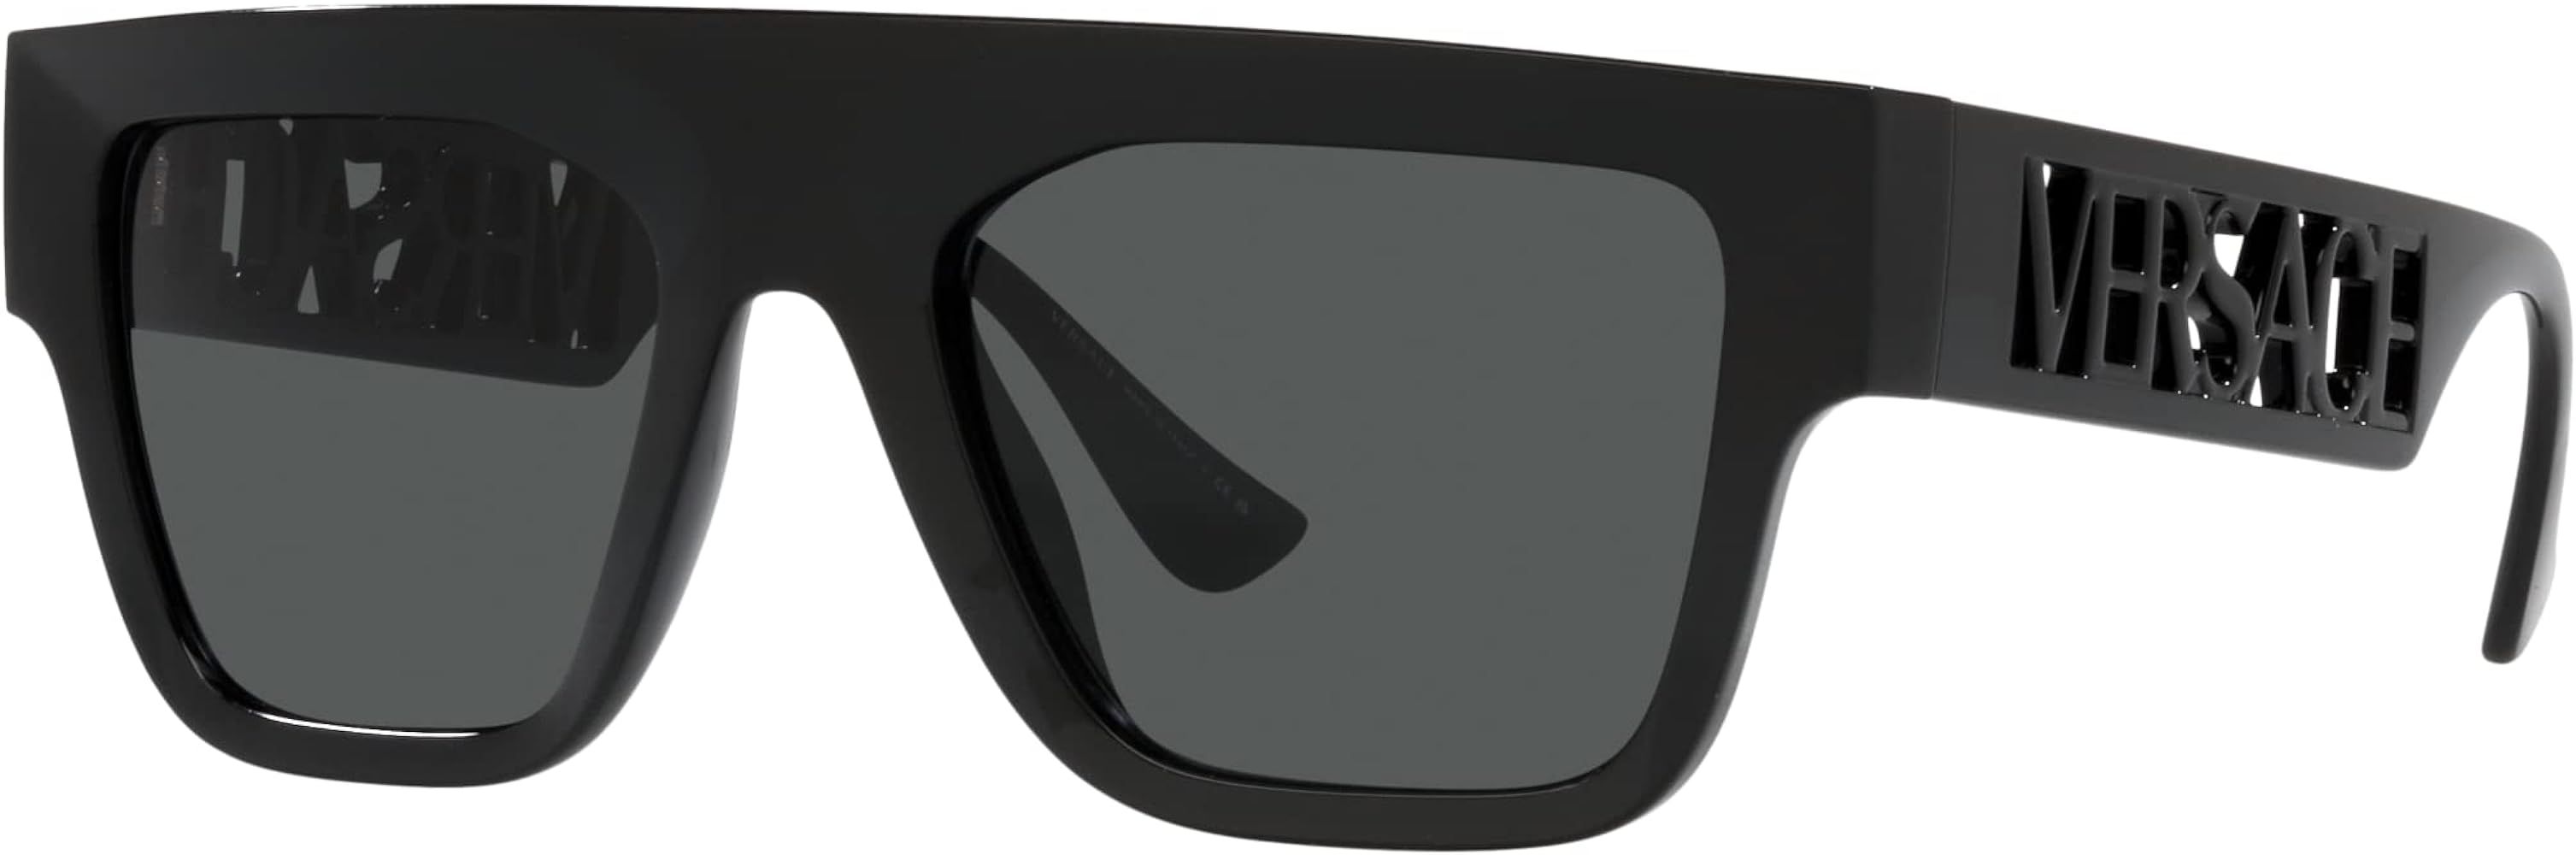 Versace Man Sunglasses Havana Frame, Dark Grey Lenses, 53MM | Amazon (US)